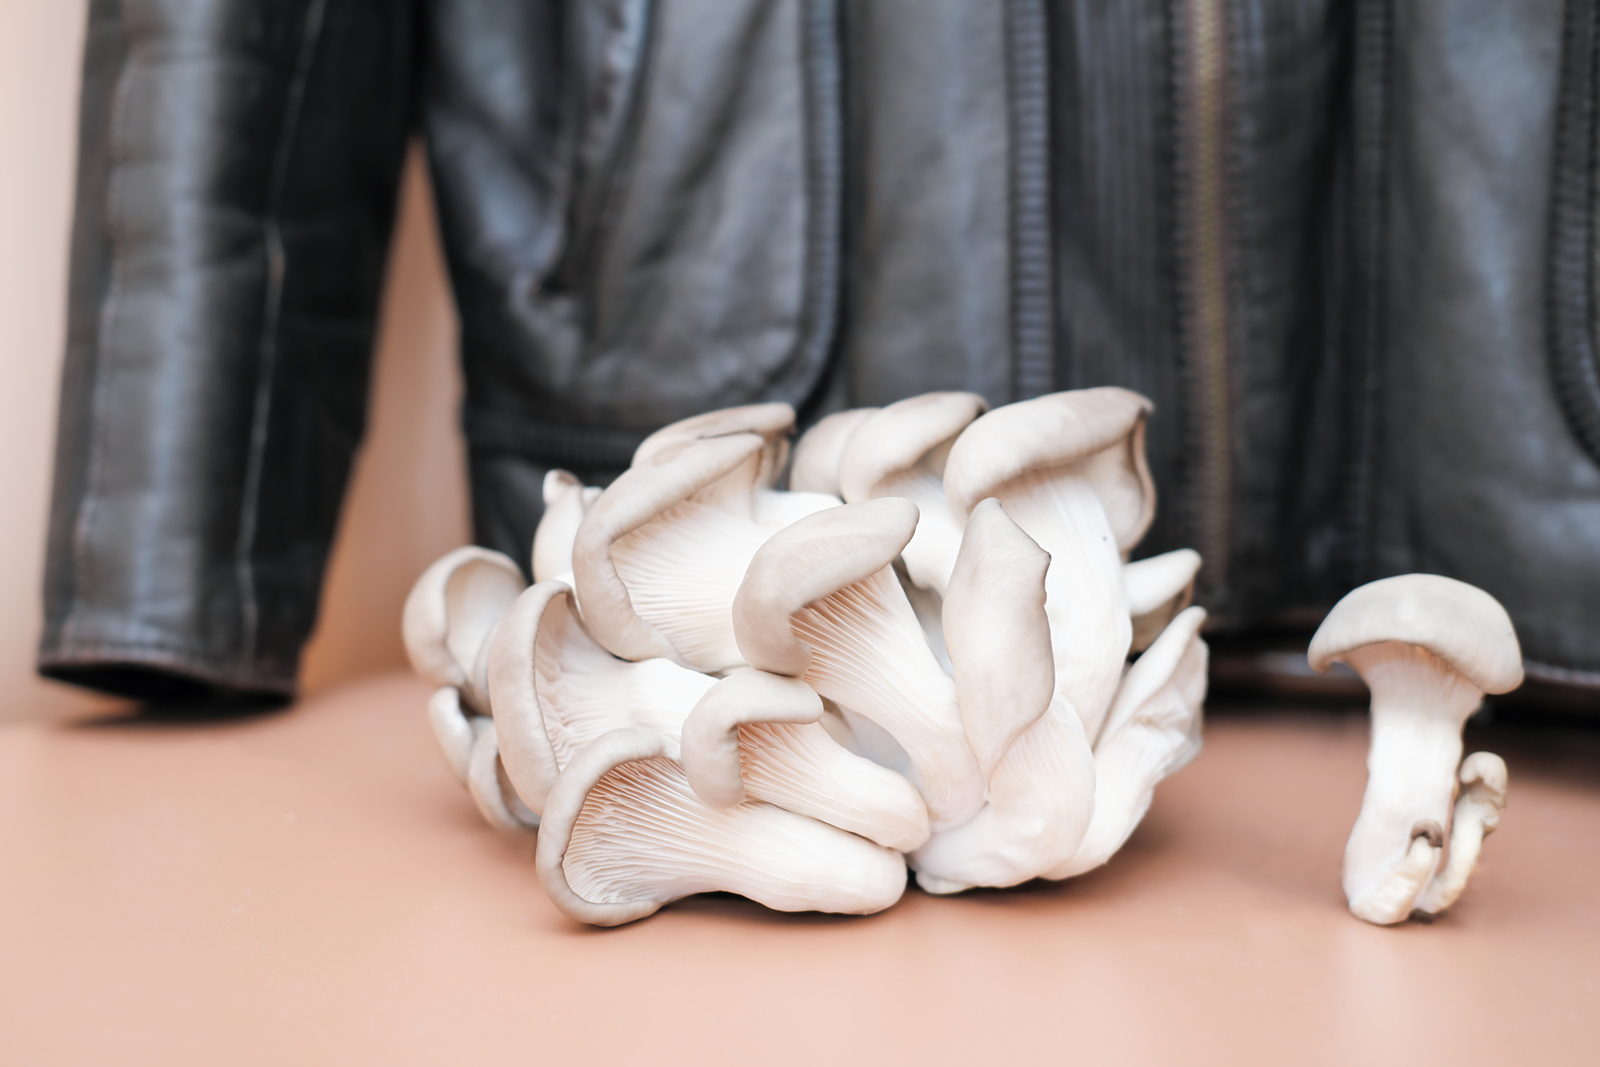 Mycelium leather is a sustainable alternative to leather—made of mushroom spores and plant fibers. Image Credit: © Luliia Panova | Dreamstime.com.